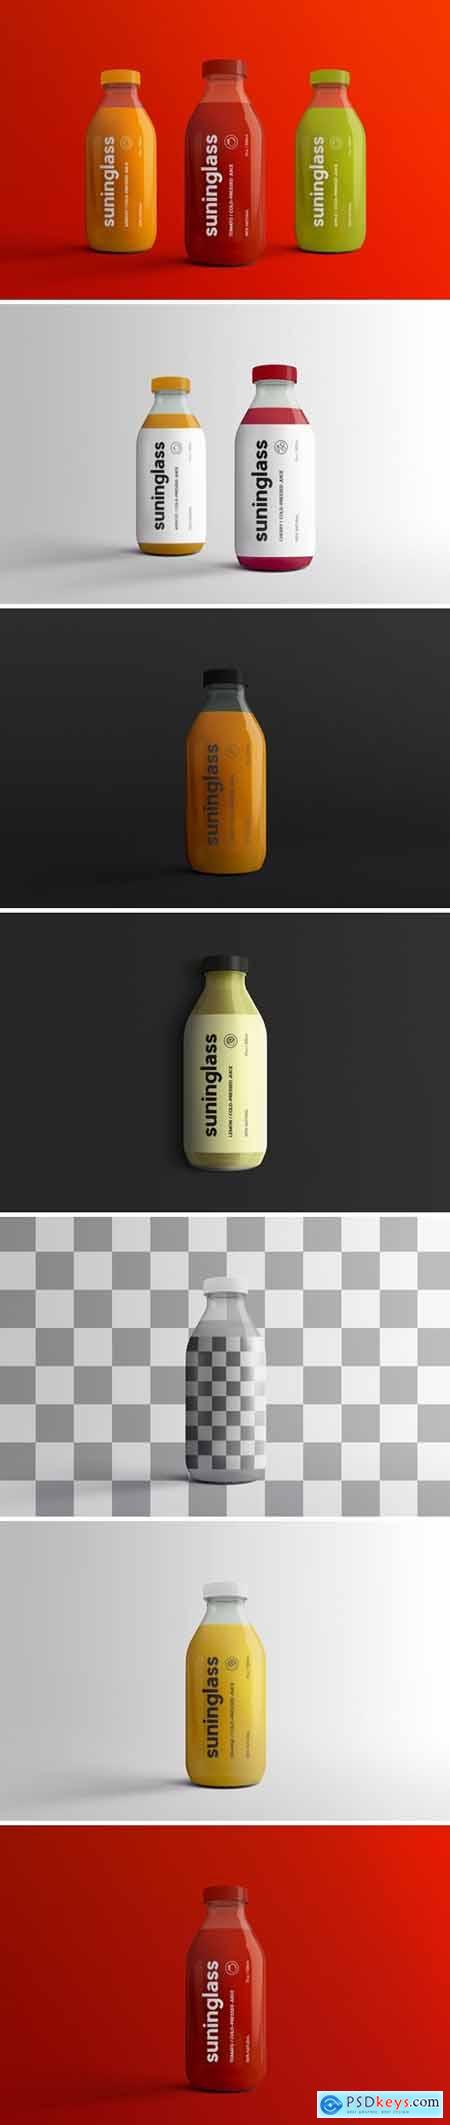 Juice Bottle Packaging Mock-Ups Vol.2